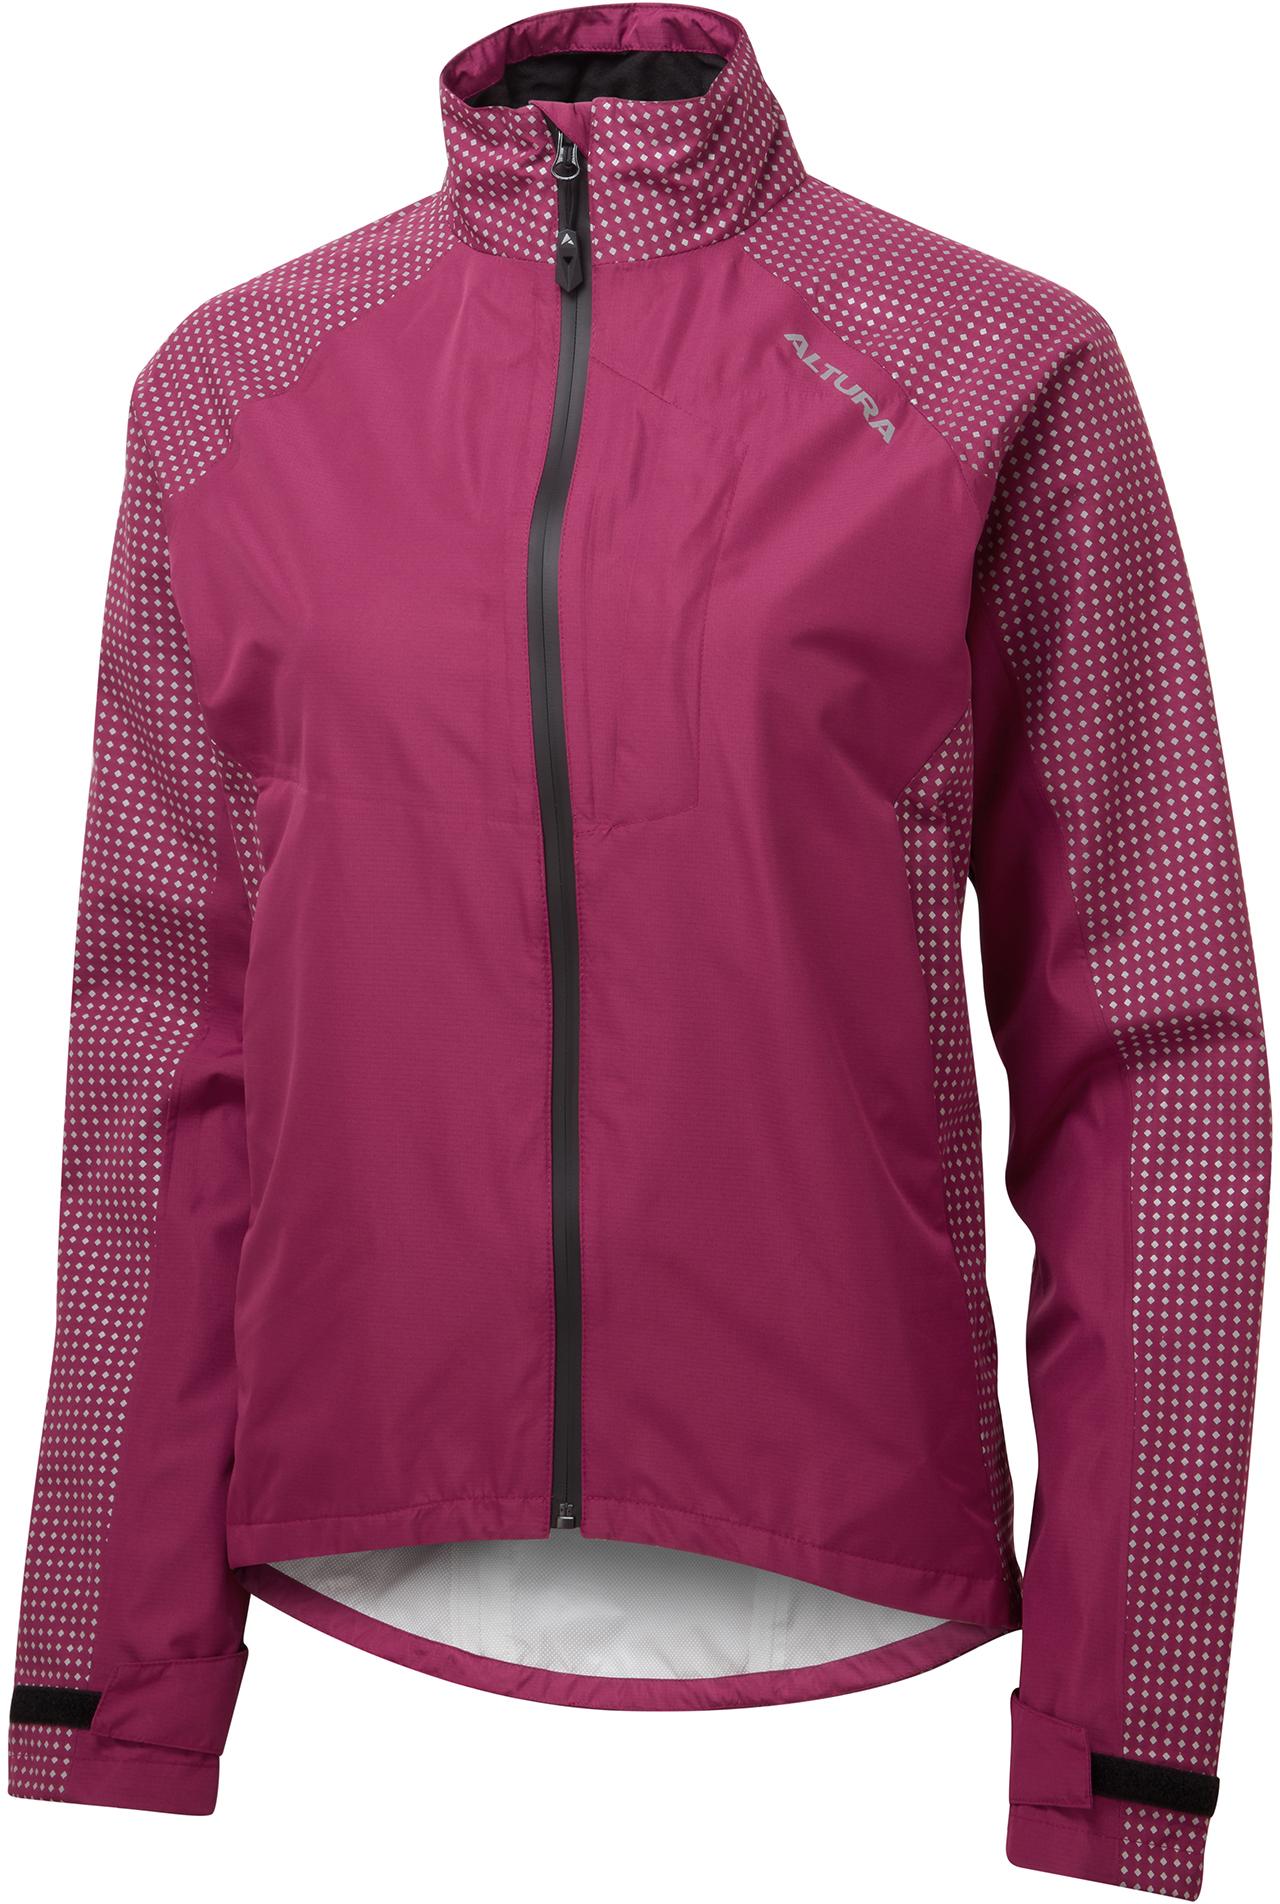 Altura Nightvision Storm Women's Waterproof Jacket Pink 10